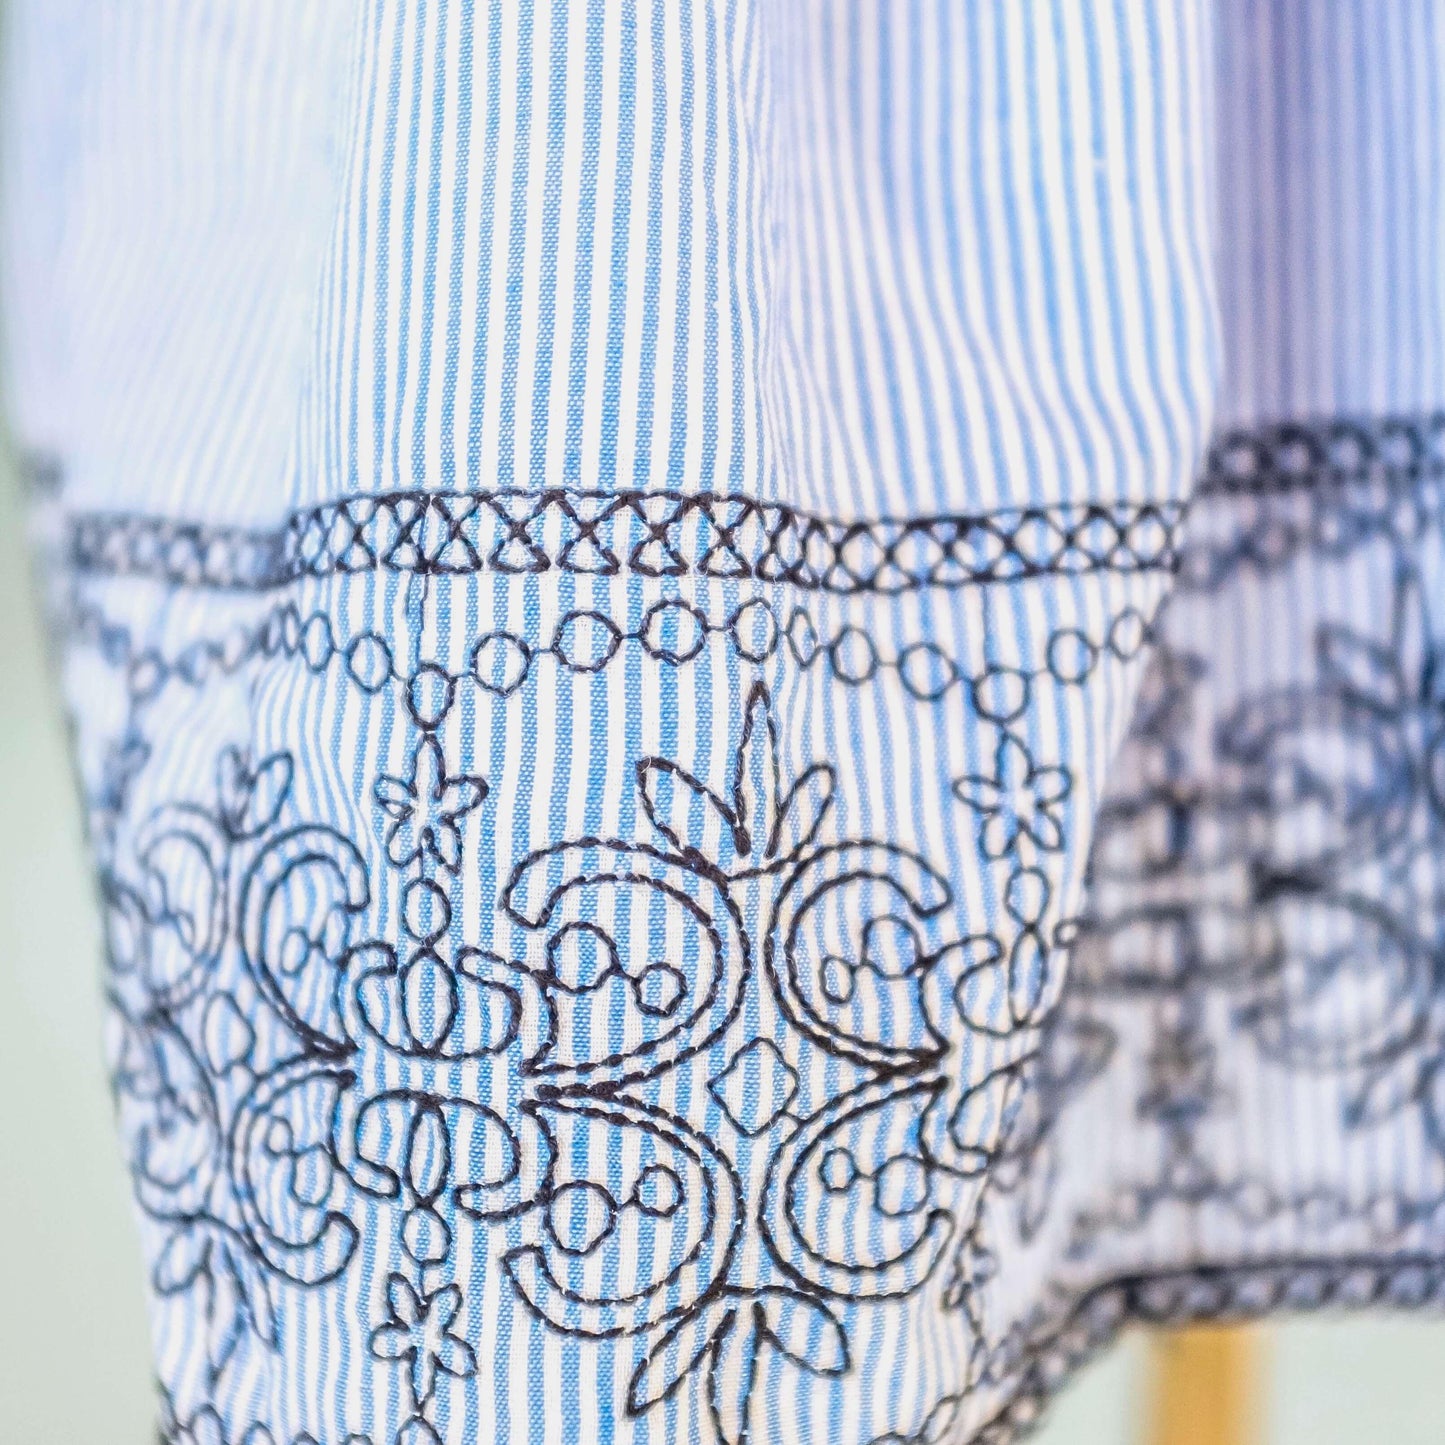 Dahlia Dress in Blue Stripes Panel Embroidery - Lil' Tati